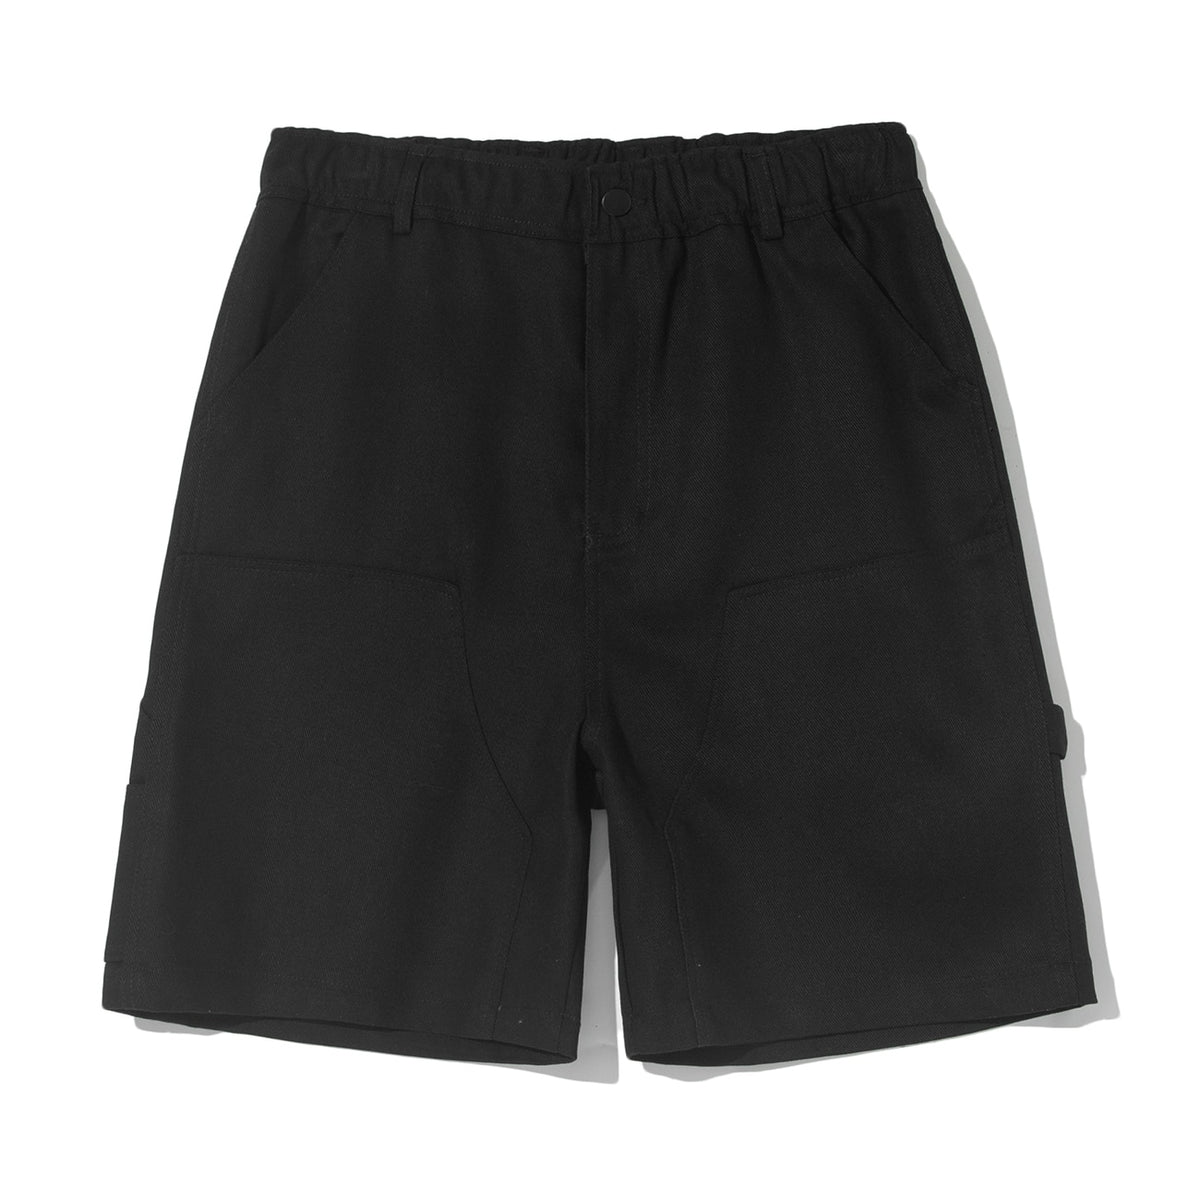 Summer Techwear Shorts Cargo – The best techwear shorts for summer!